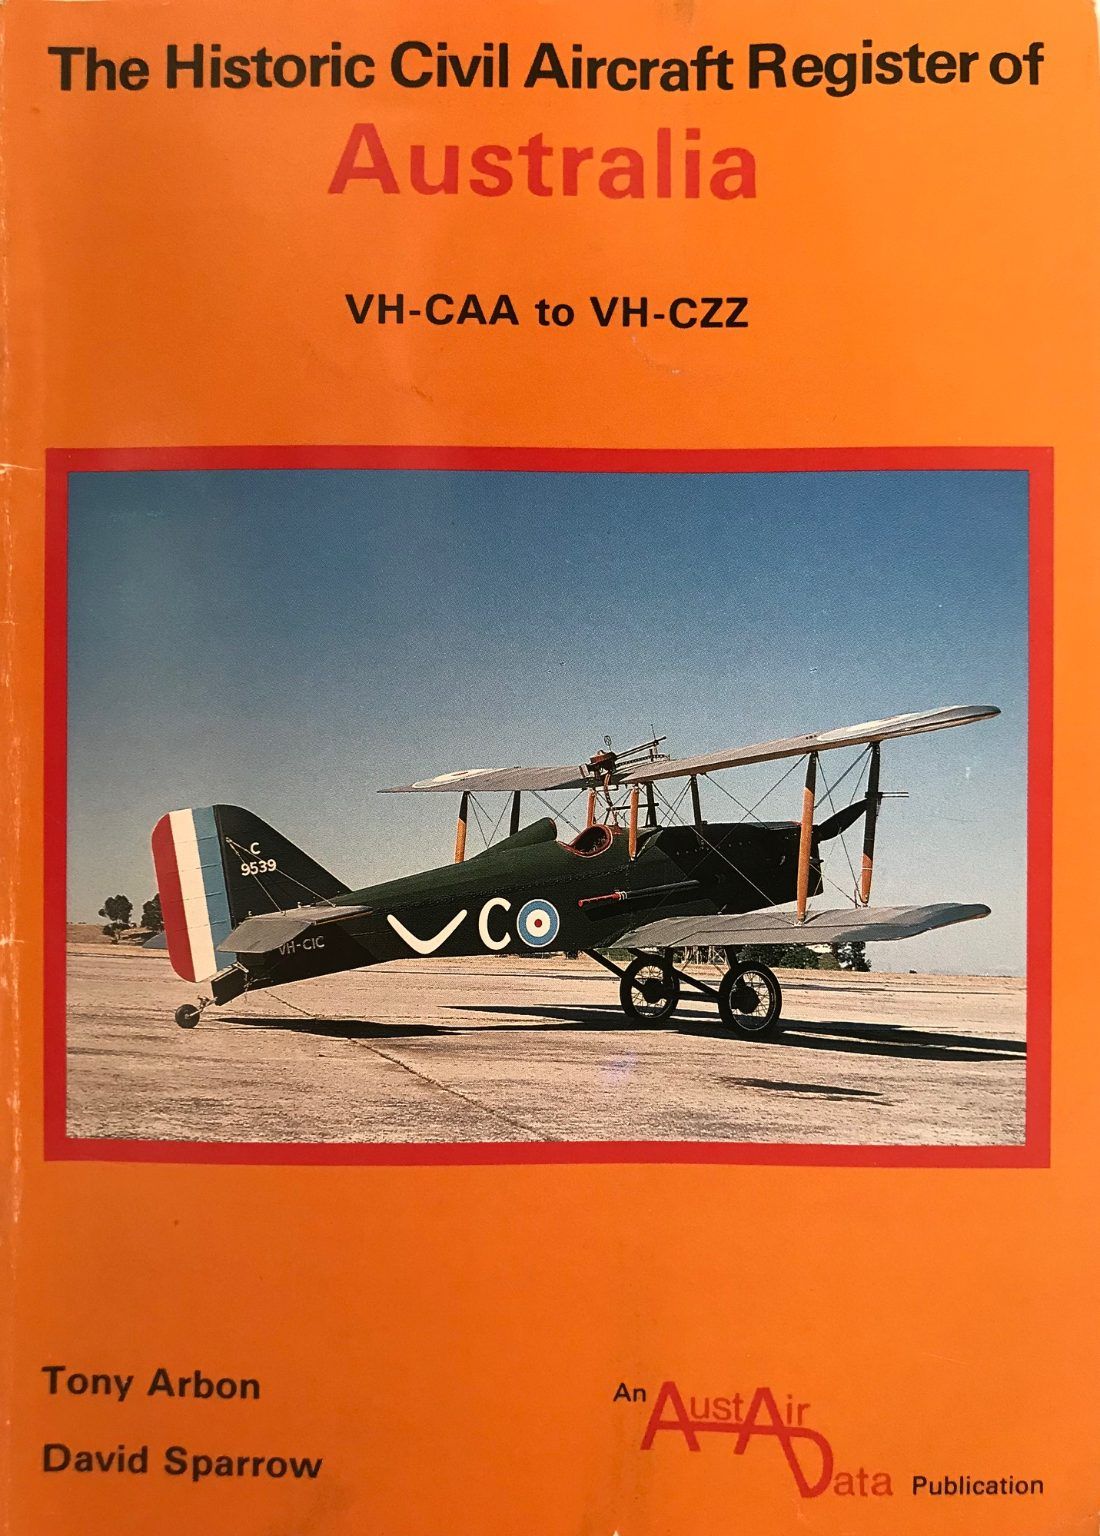 AUSTRALIA: The Historic Civil Aircraft Register VH-CAA to VH-CZZ